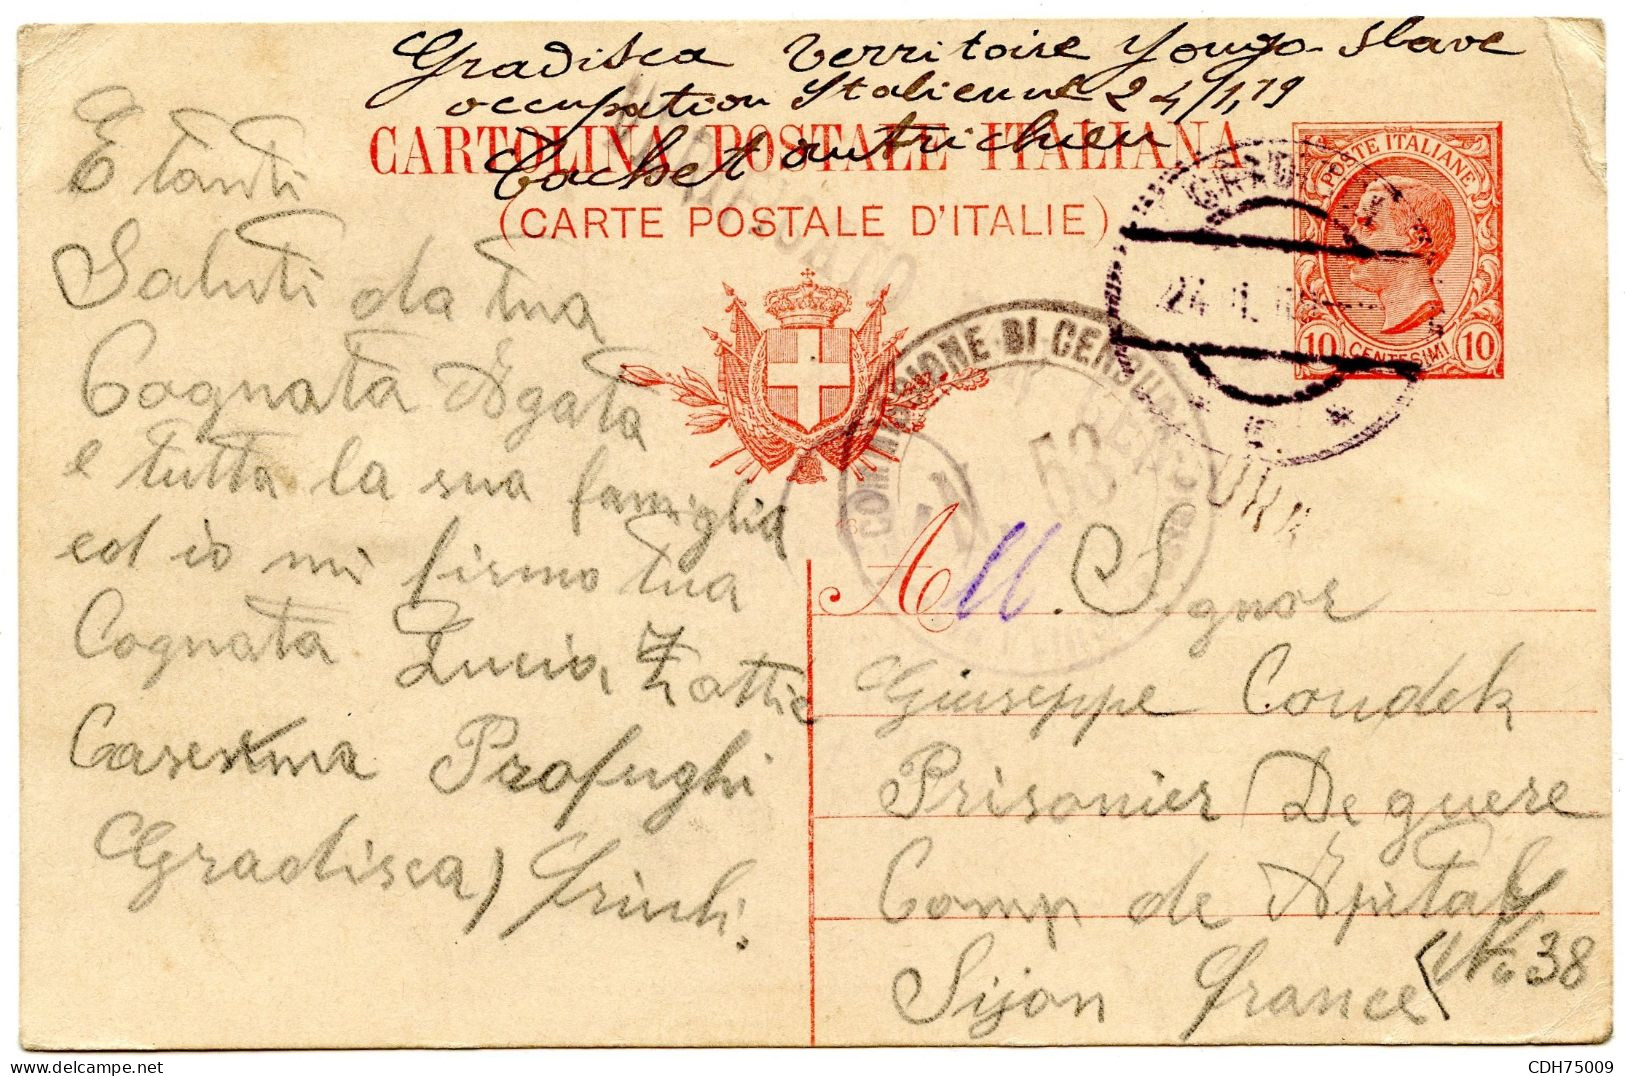 ITALIE - CARTE POSTALE 10C DE GRADISCA POUR LA FRANCE, 1919 - Venezia Giuliana